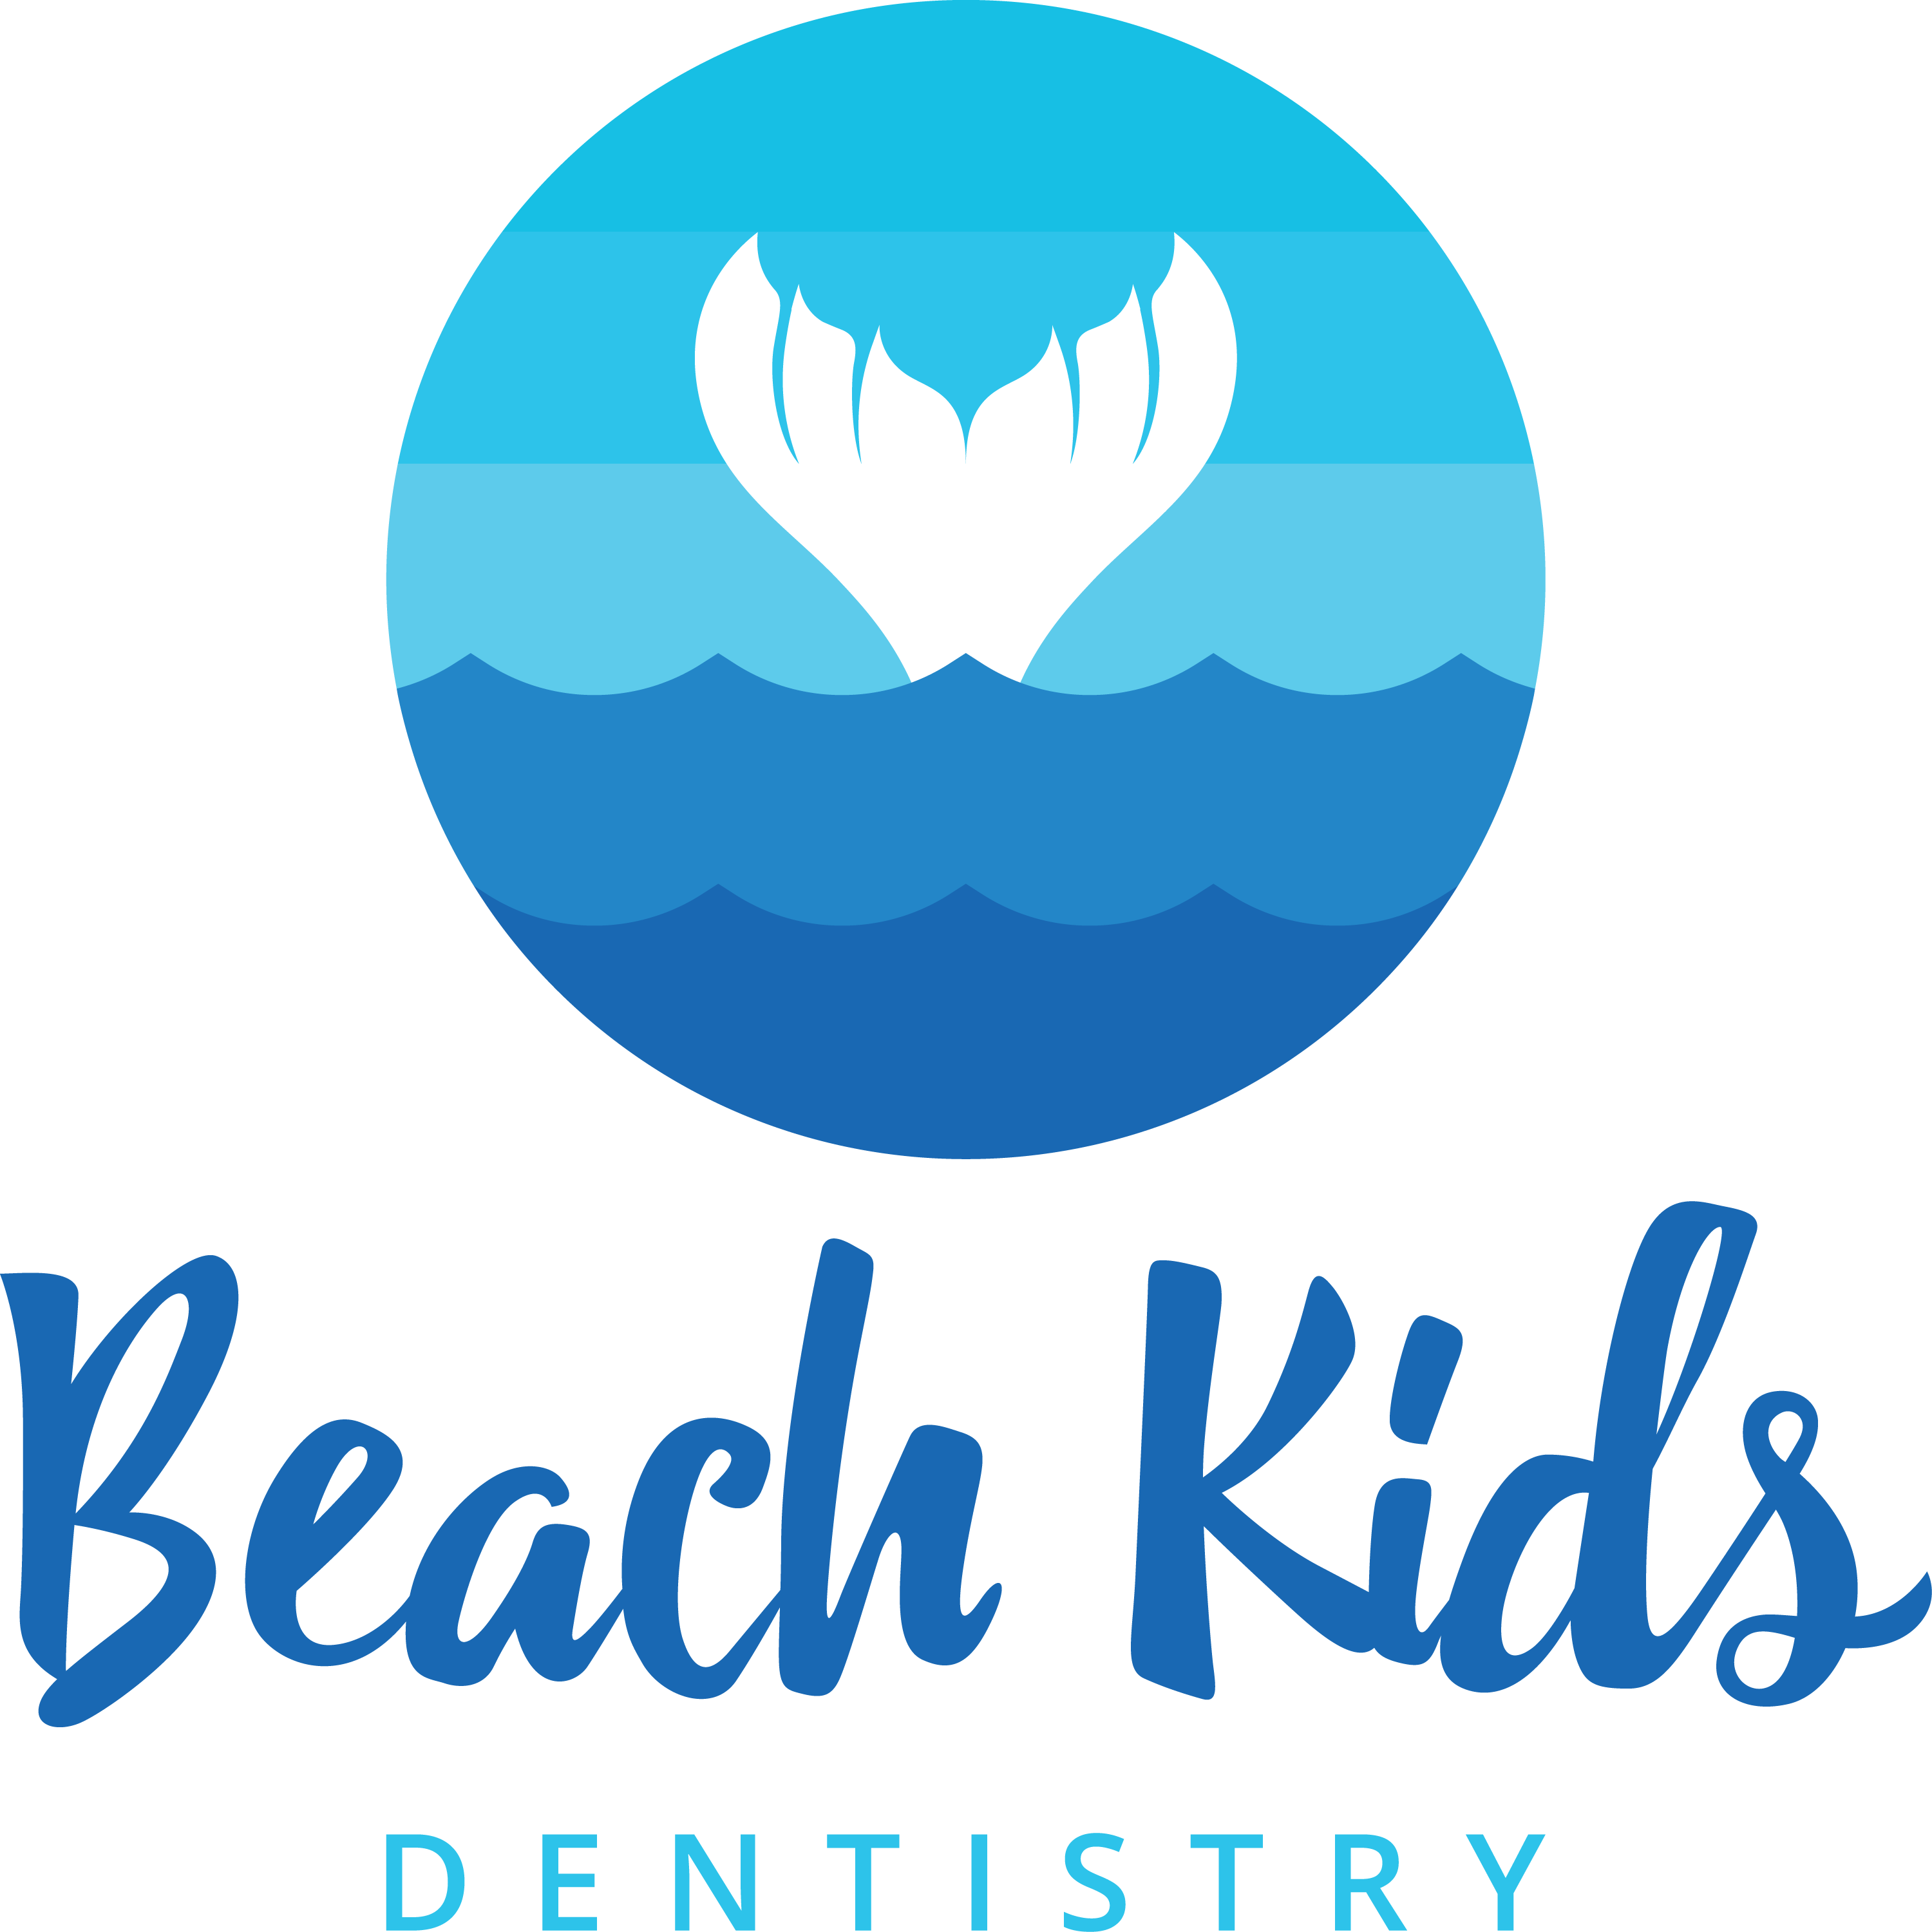 Beach Kids Dentistry Final Logo CMYK   Logo On Transparent Backgrounds   Hires